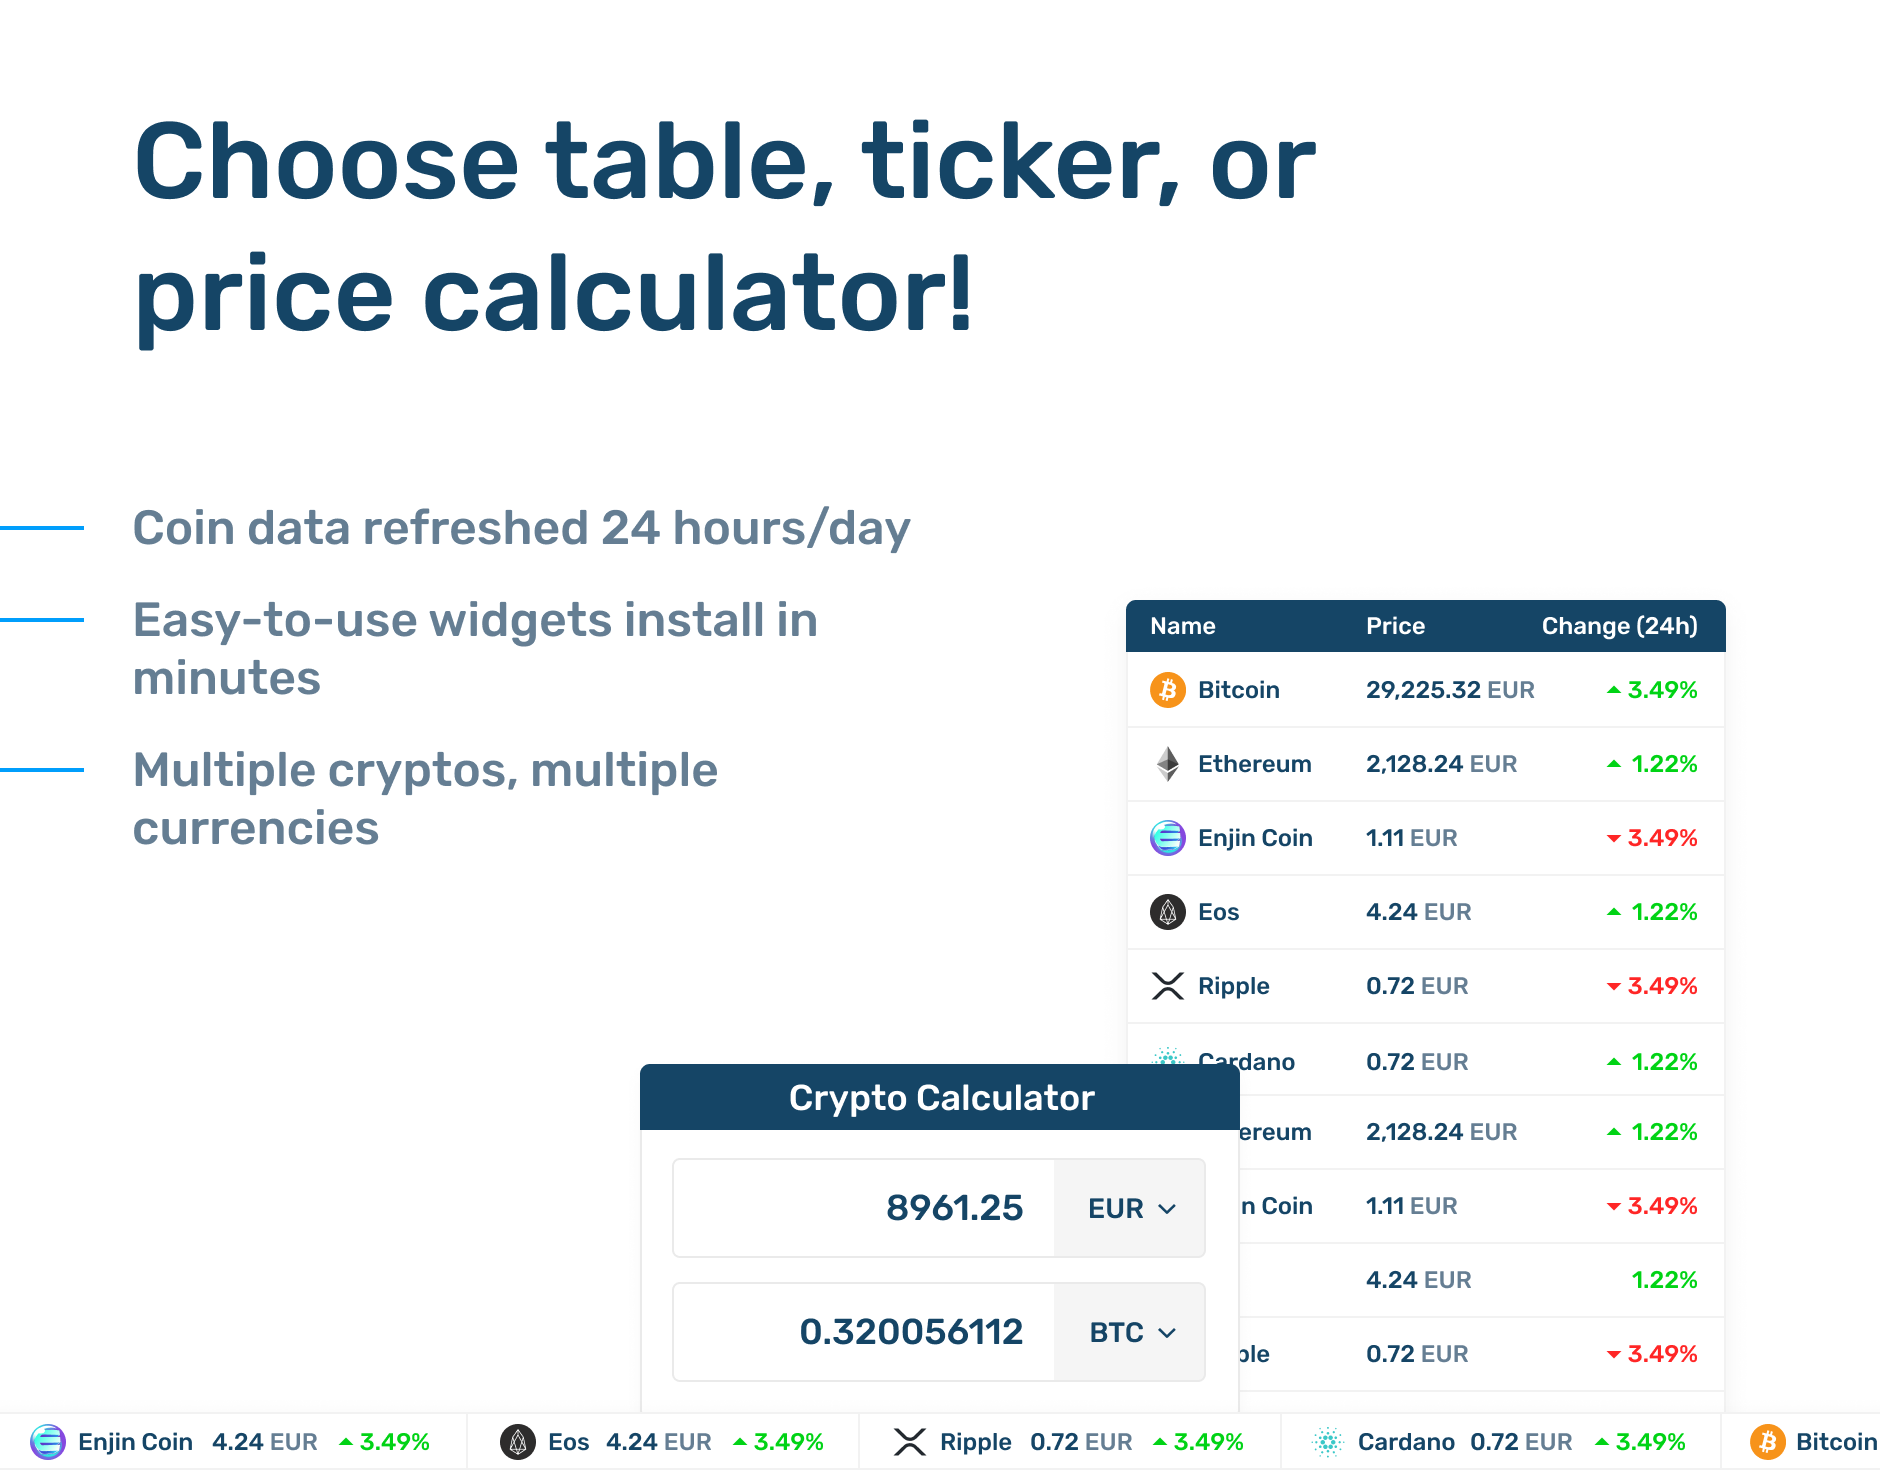 Choose table, ticker or price calculator